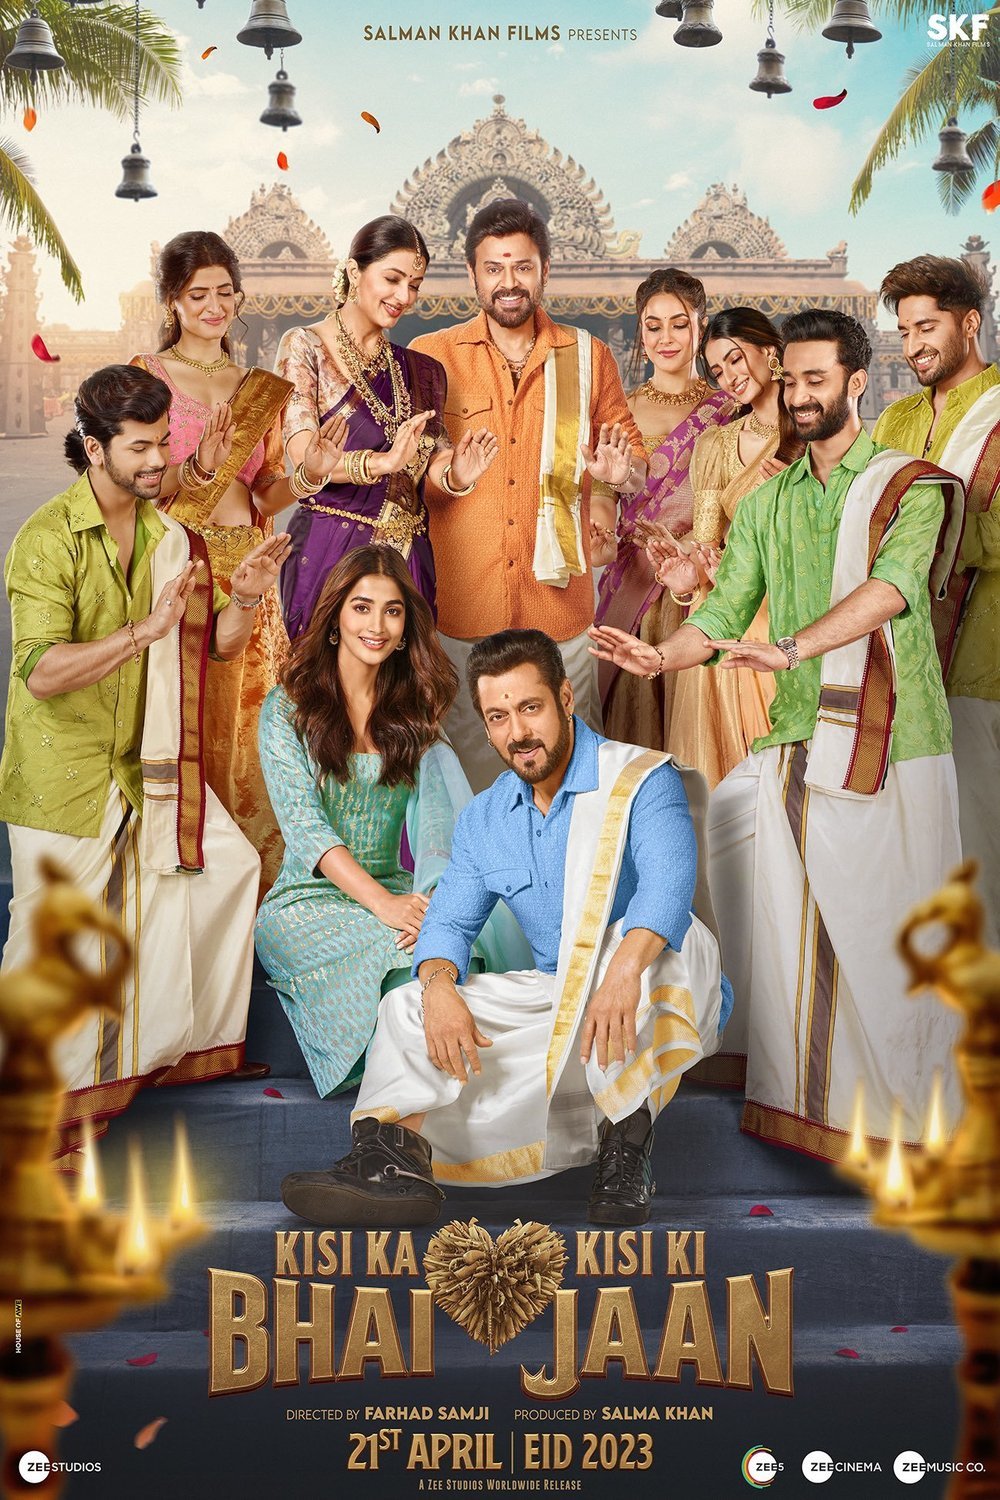 Hindi poster of the movie Kisi Ka Bhai Kisi Ki Jaan